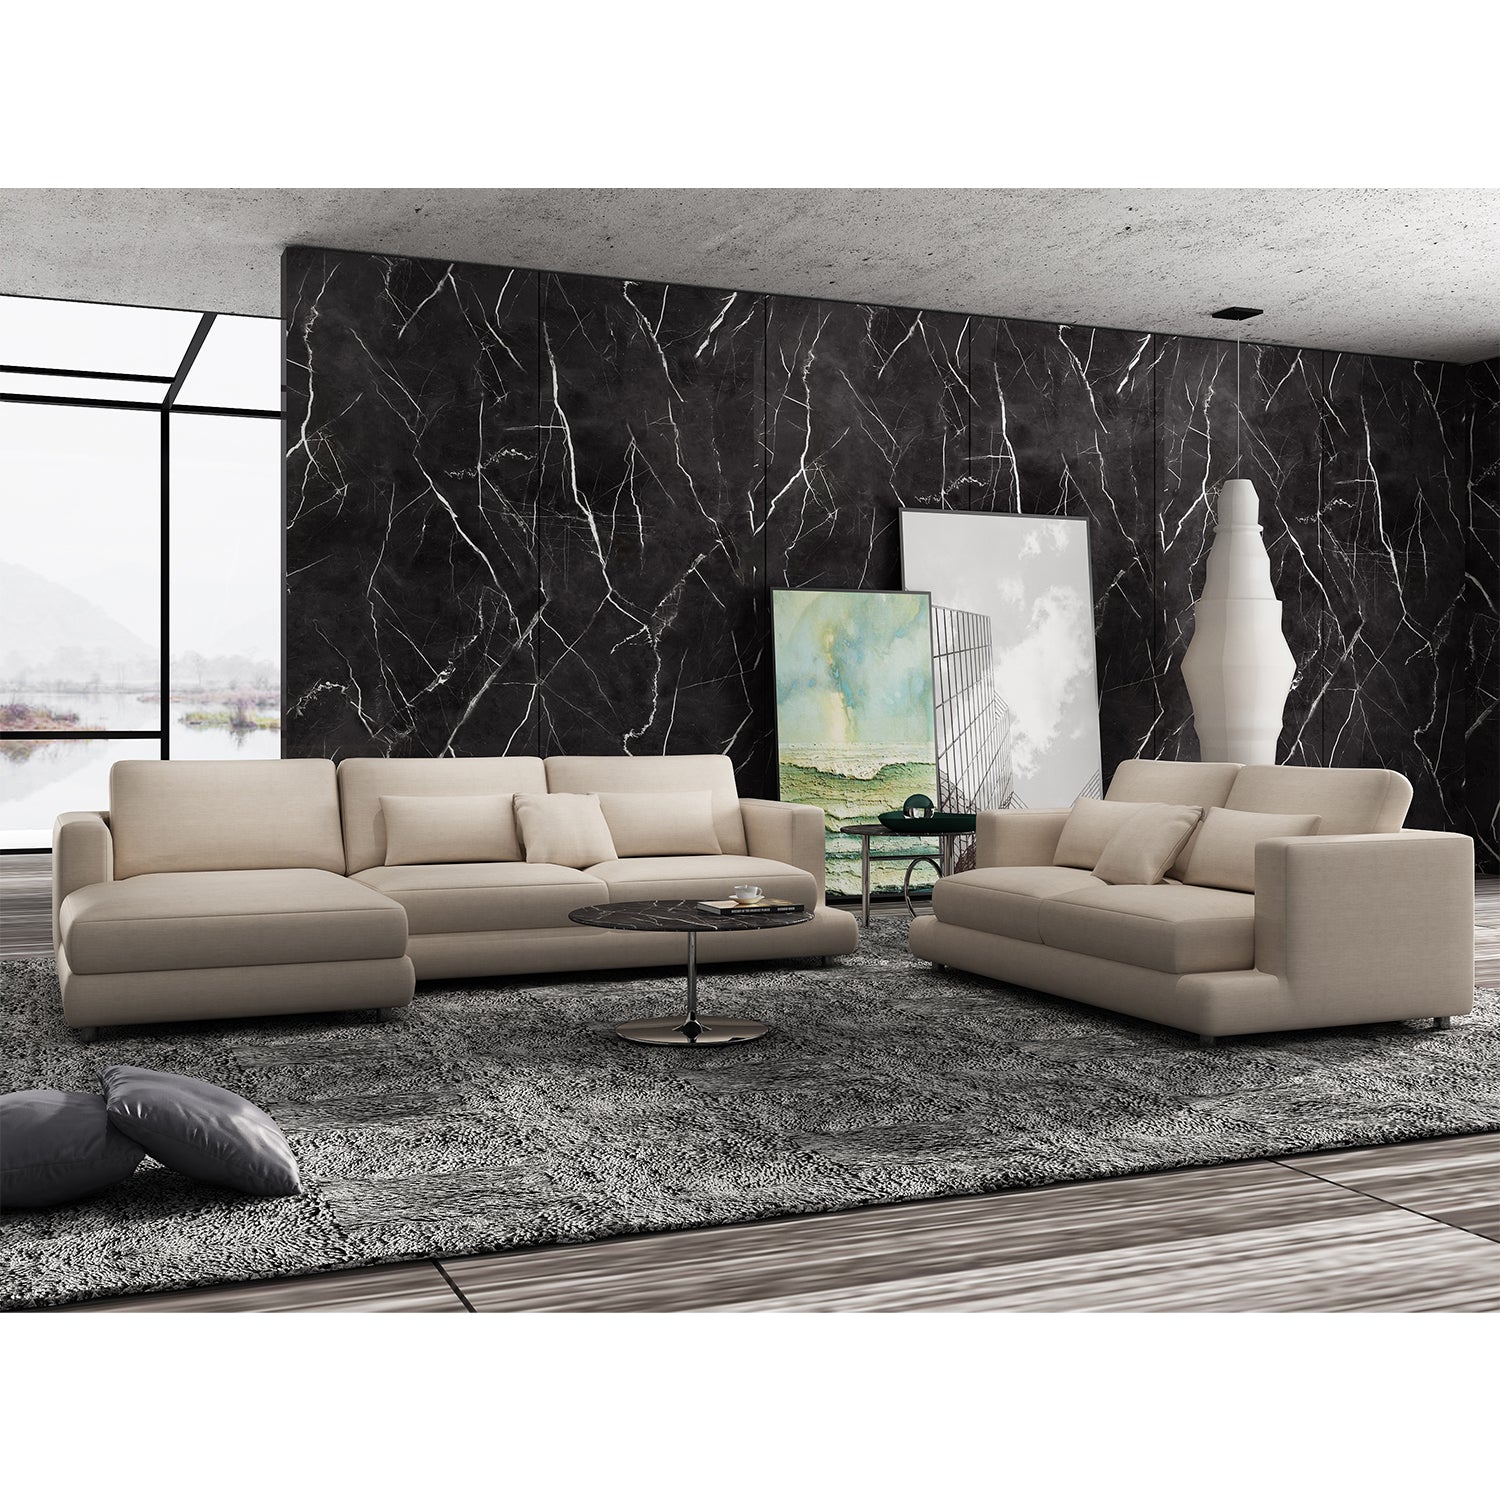 Sofa RMC1 - 1505